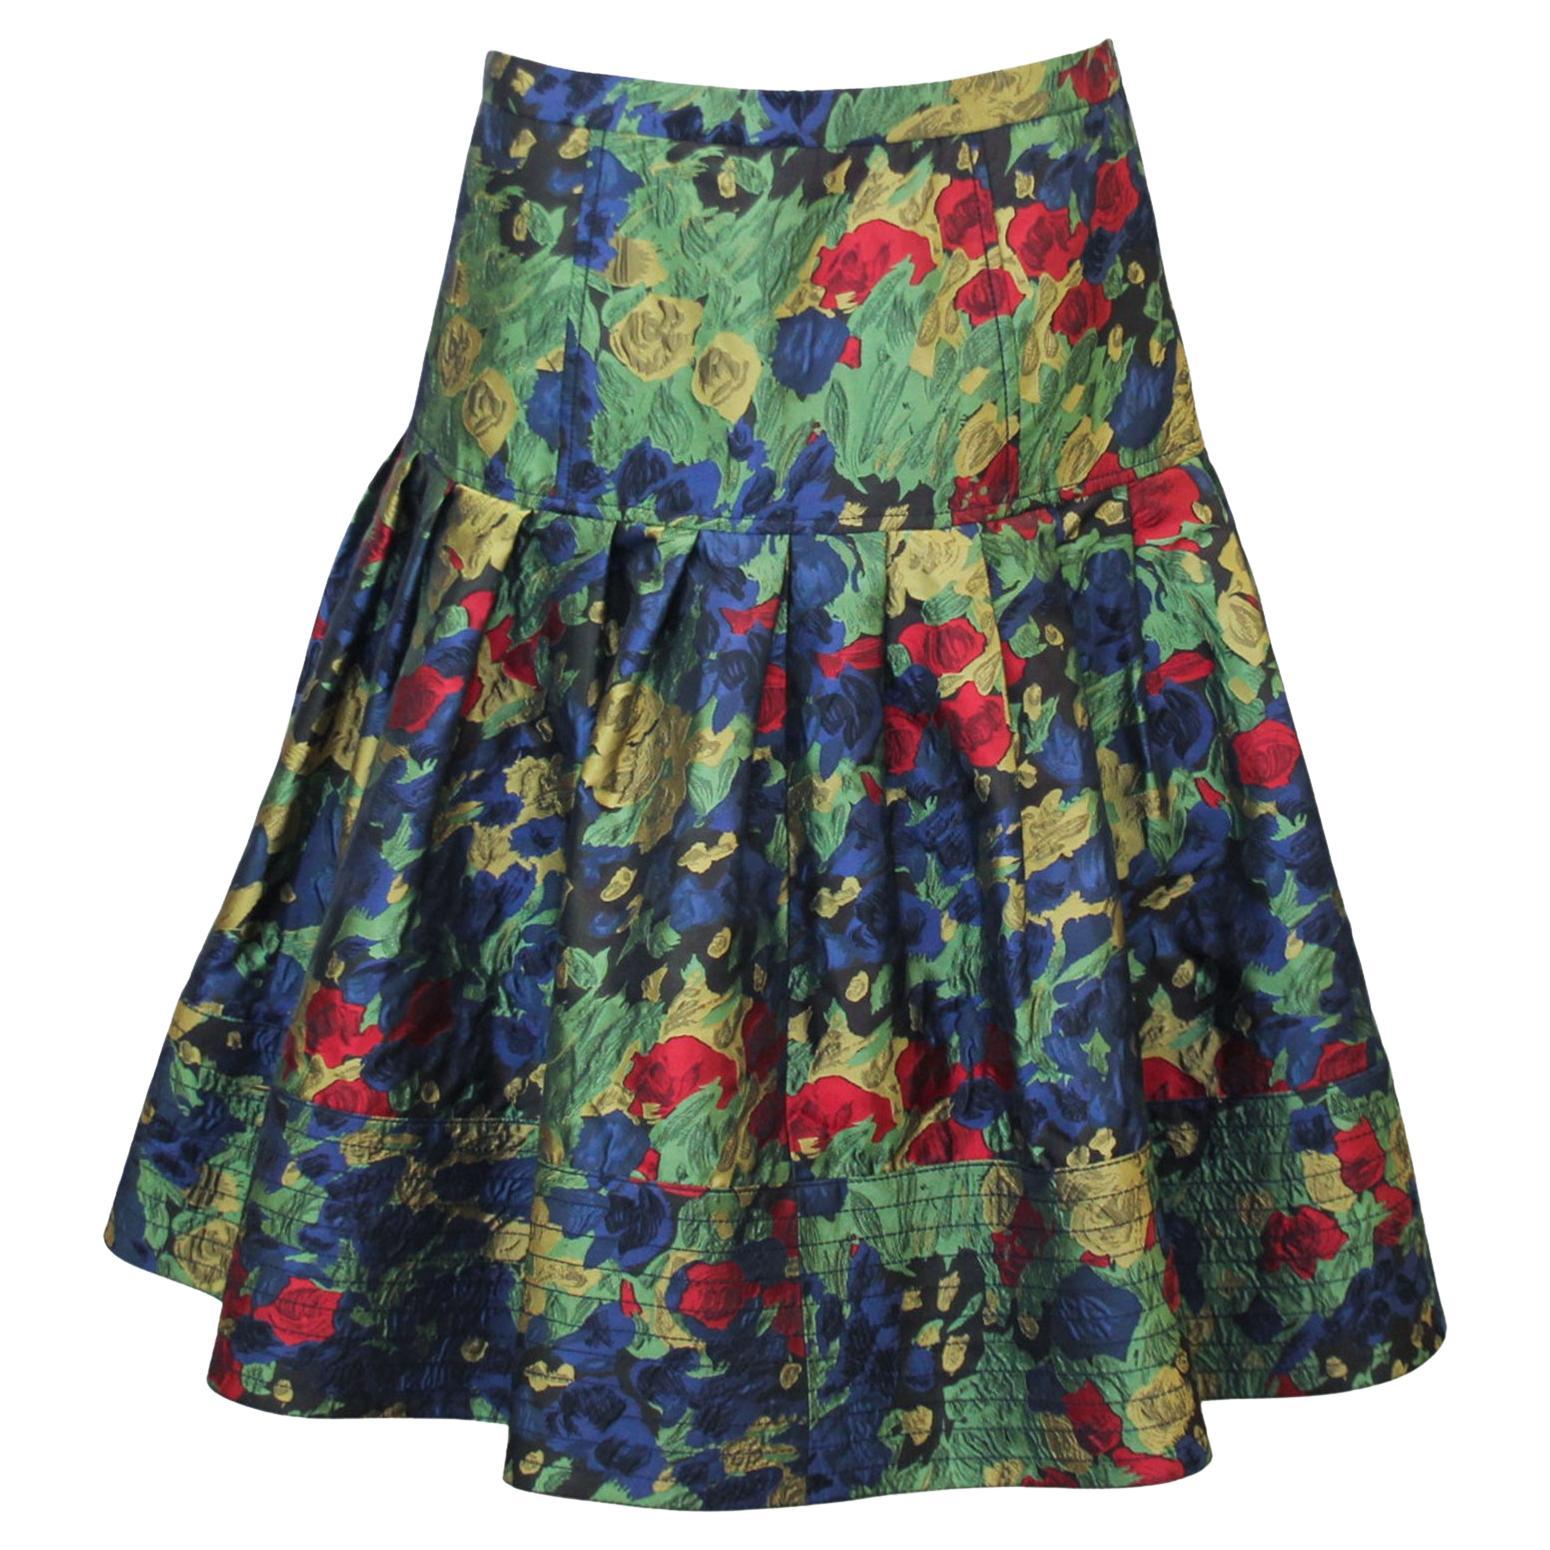 Late 1990s Oscar de la Renta Dark Floral Flared Skirt